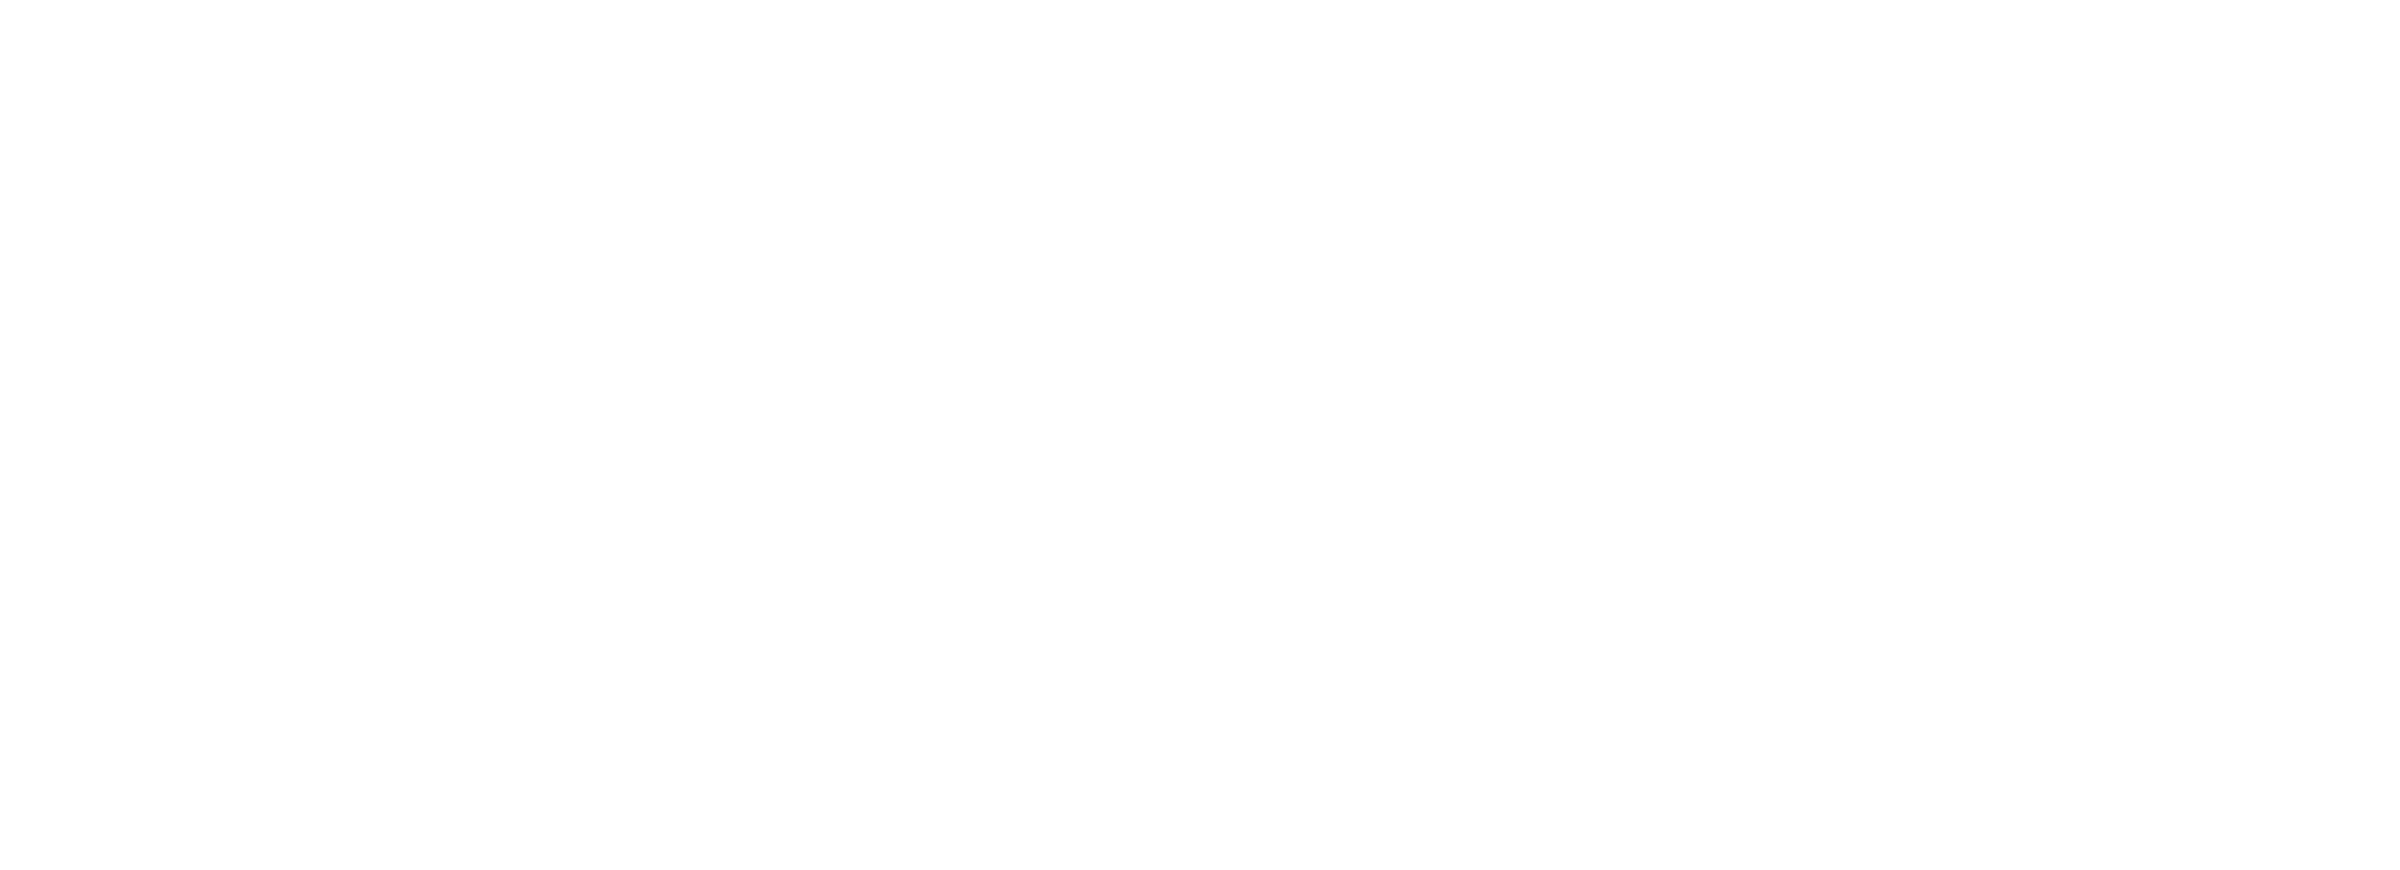 cbs-logo-png-transparent copy.png